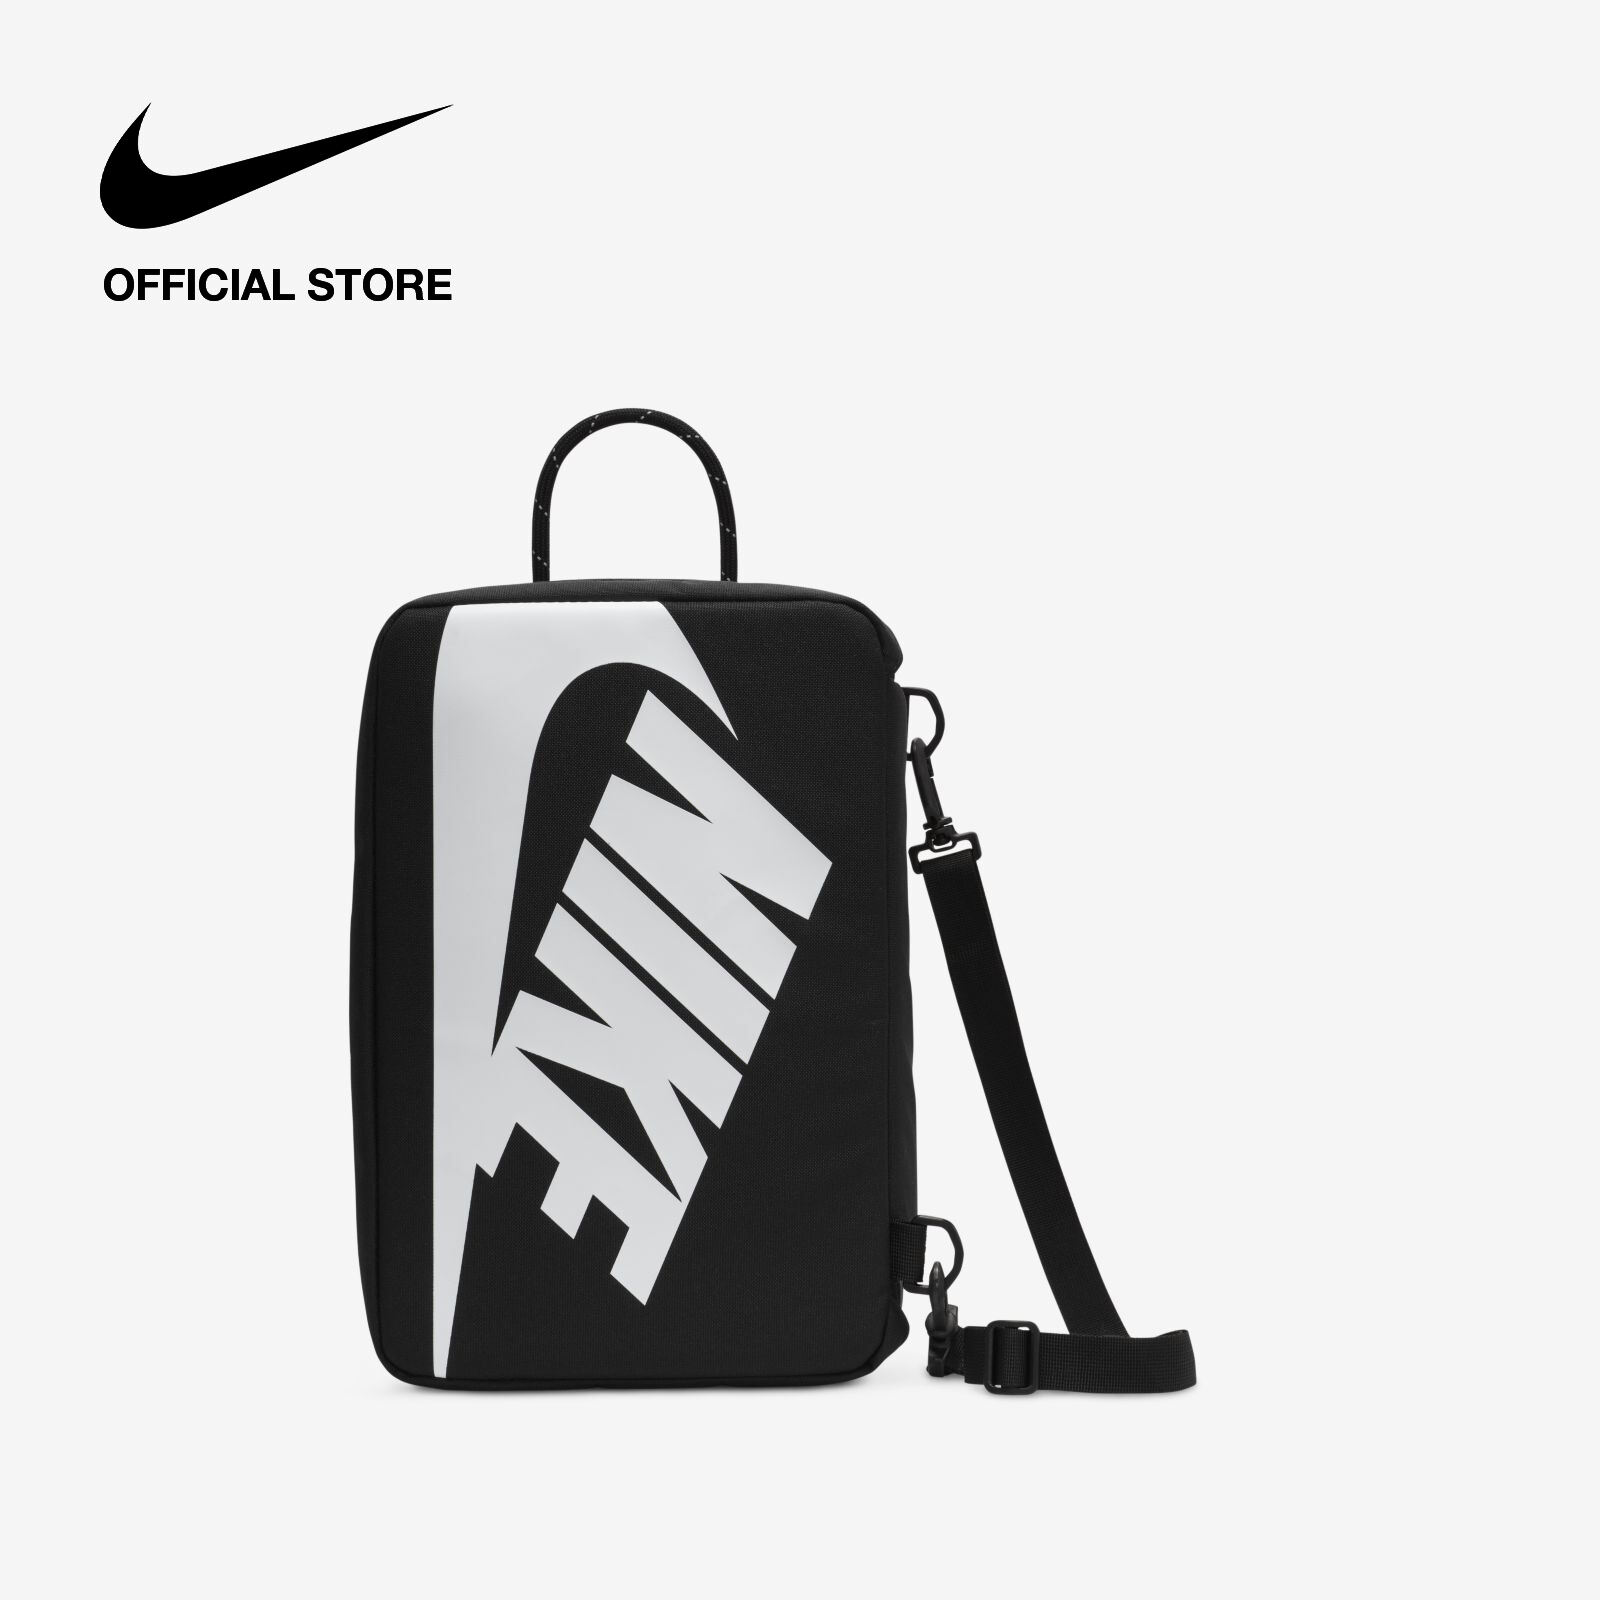 Nike Unisex Brasilia 9.5 Training Duffel Bag (Large, 95L)